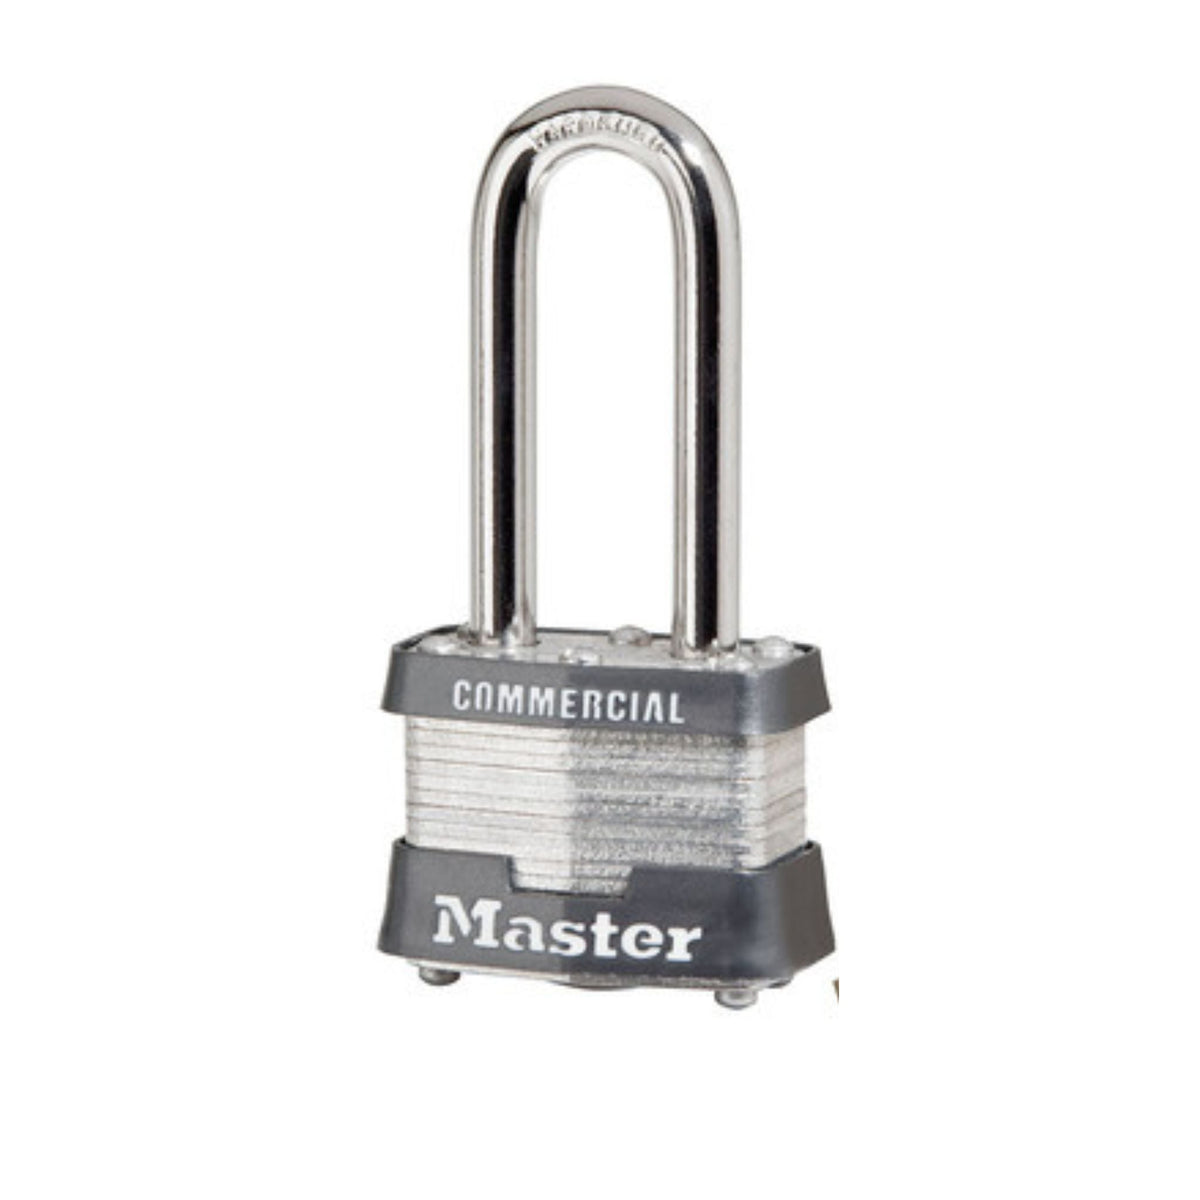 Master Lock 3KALH 0330 Lock Laminated Steel Padlocks Keyed Alike to Match Existing Key Number KA0330 with 2-Inch Shackle - The Lock Source